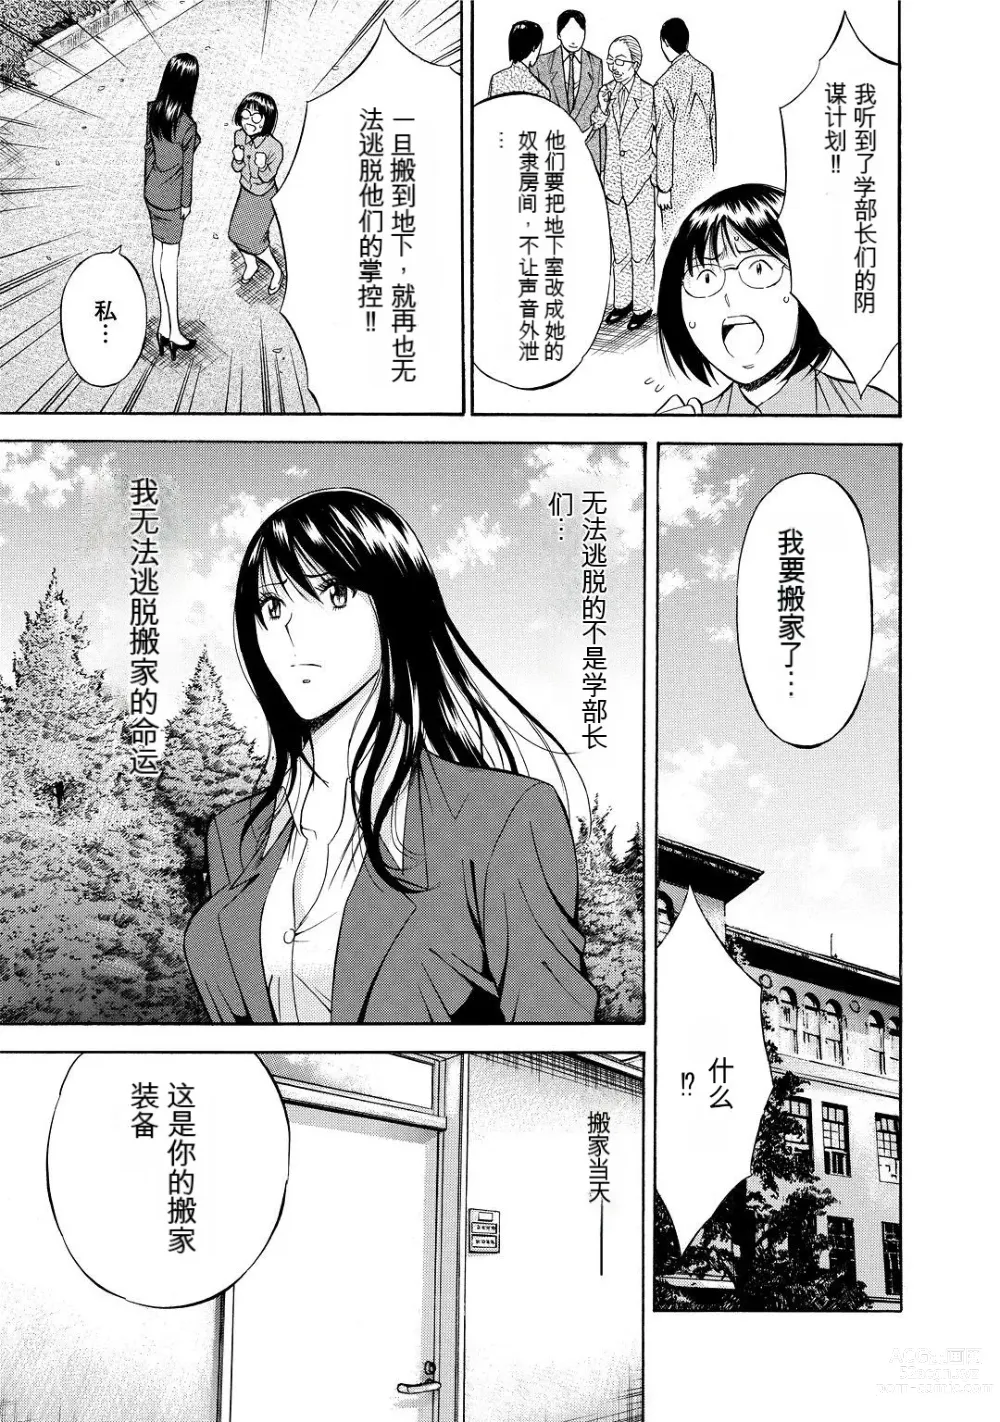 Page 177 of manga Gucchun Hikkoshitai